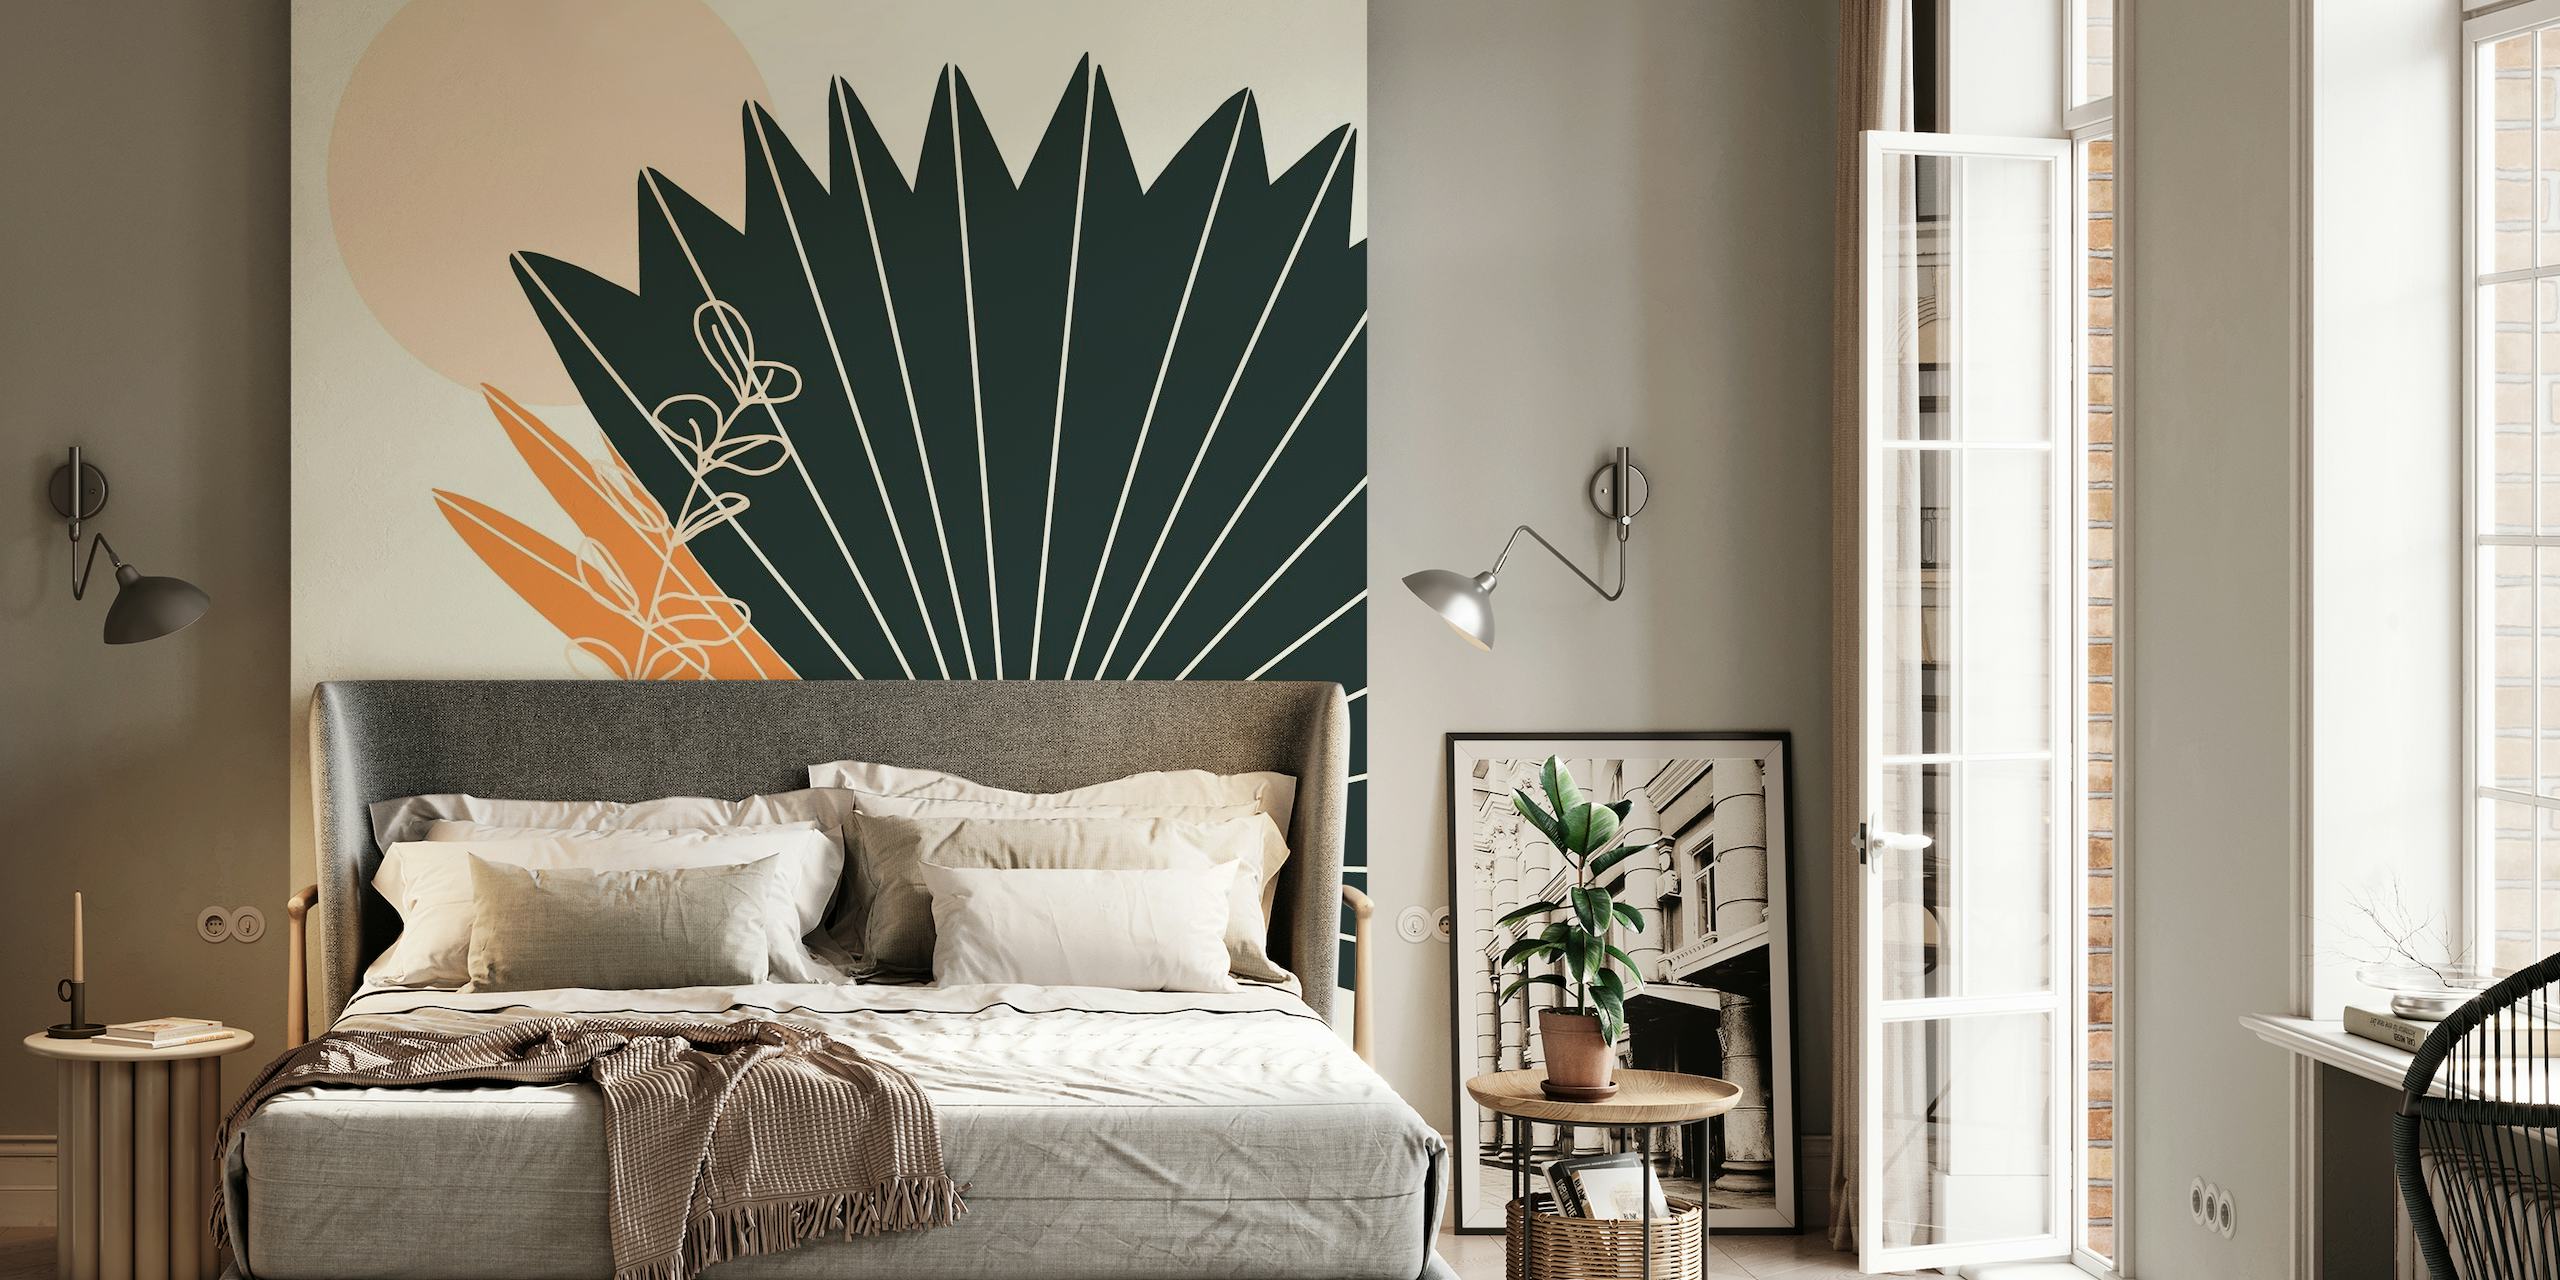 Abstraktes Wandbild mit stilisierten Palmblättern und kunstvoller Vase in Erdtönen